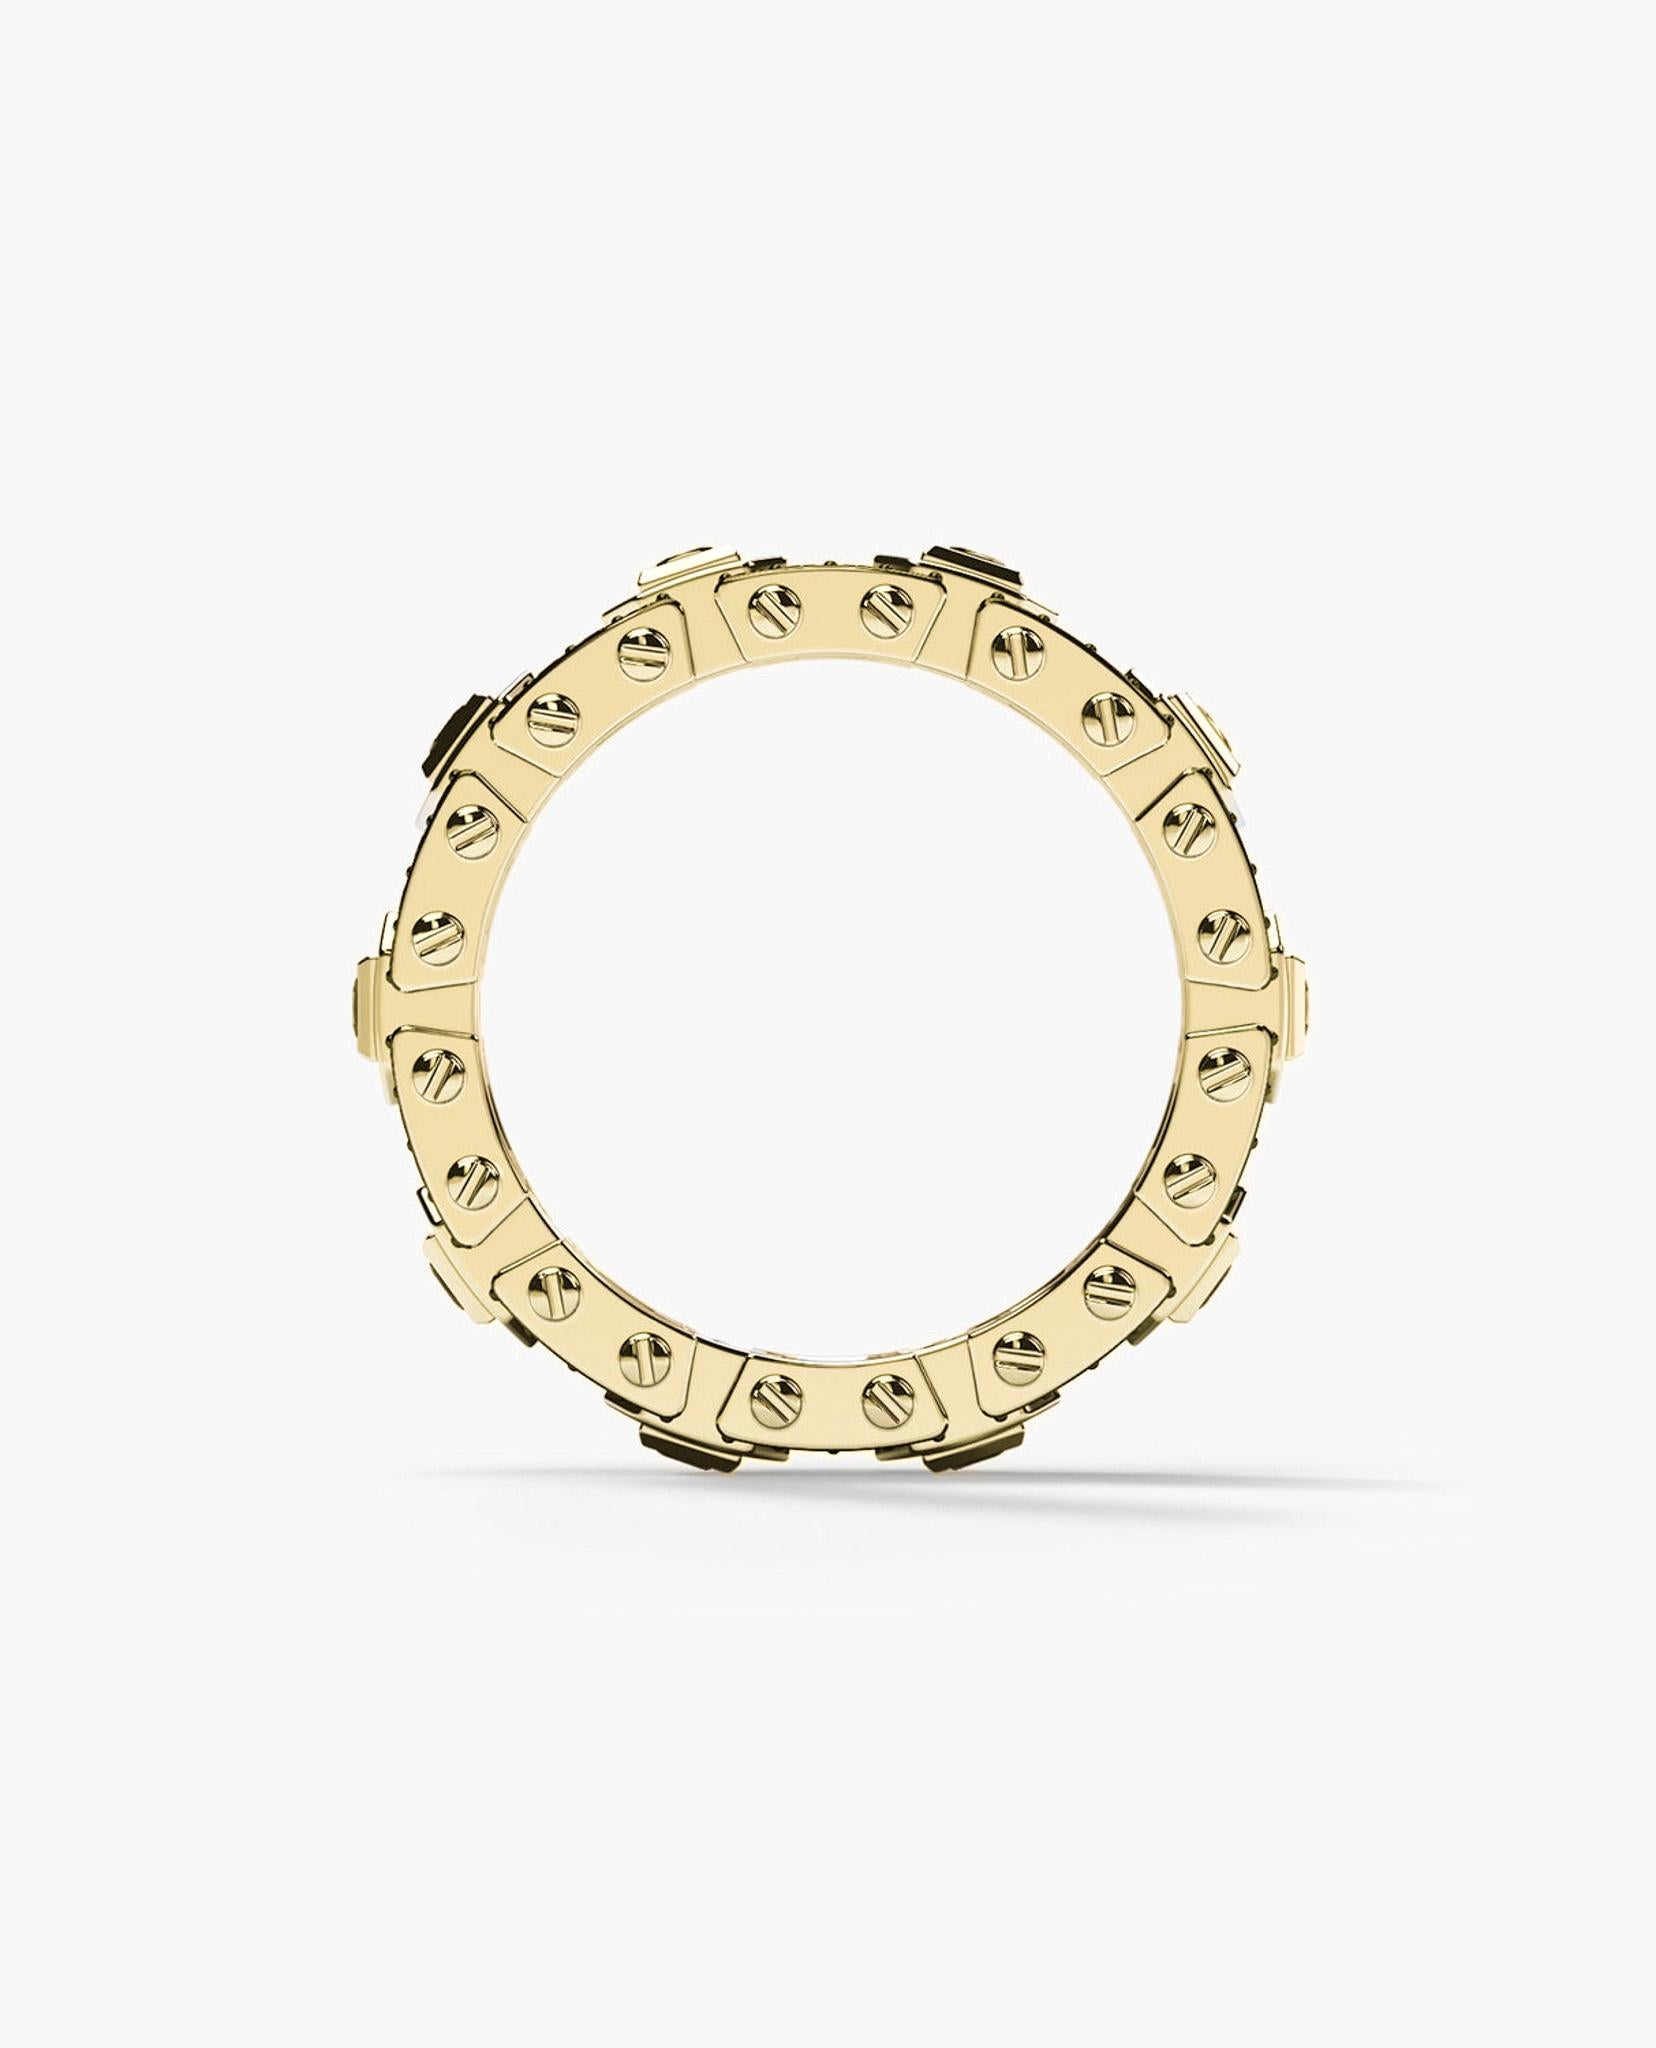 Princess Cut LA PAZ 14k Yellow Gold Wedding Ring with 1.20ct Diamonds for Women and Men